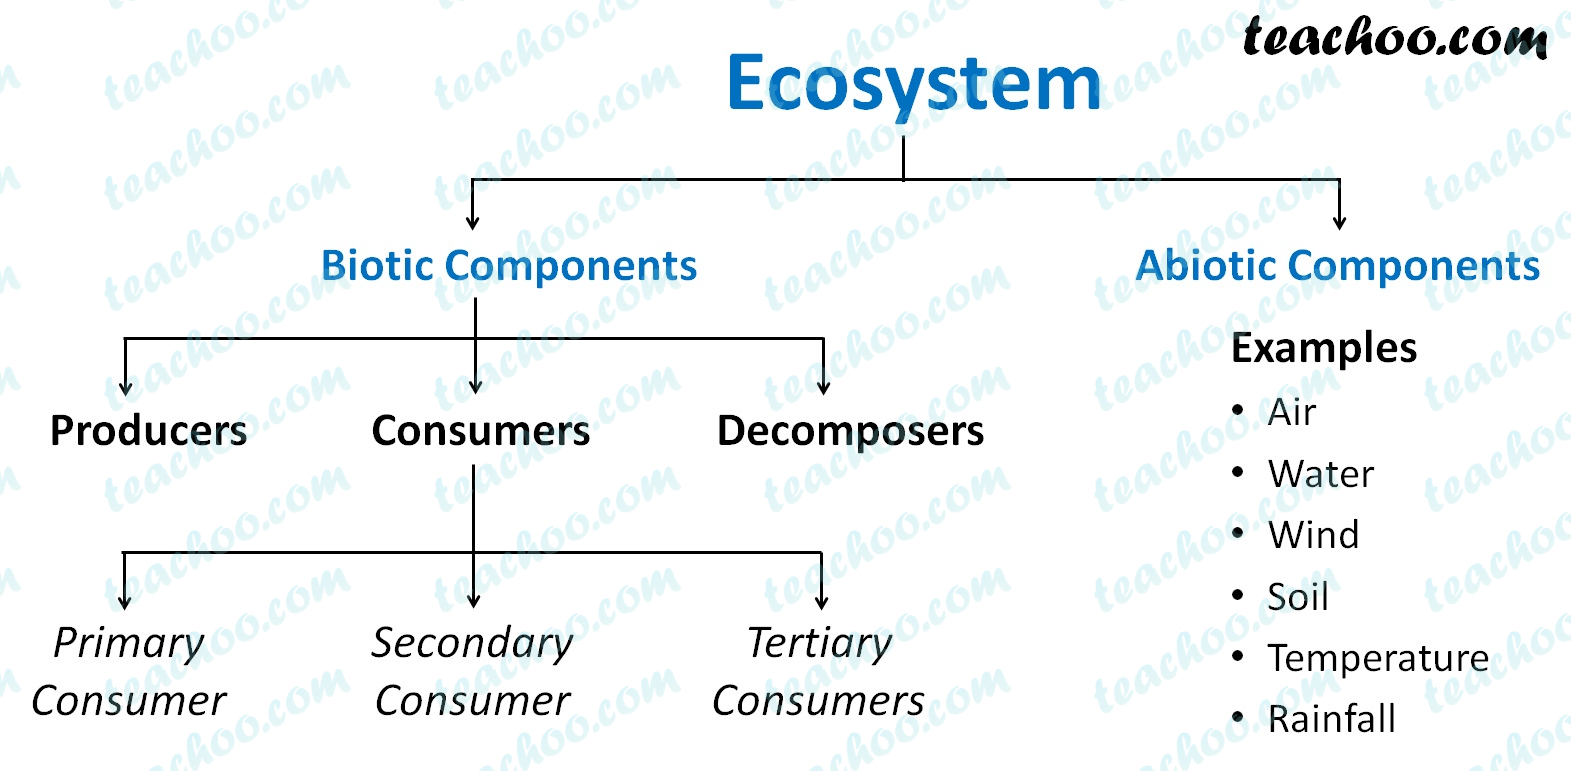 components-of-an-ecosystem---teachoo.jpg